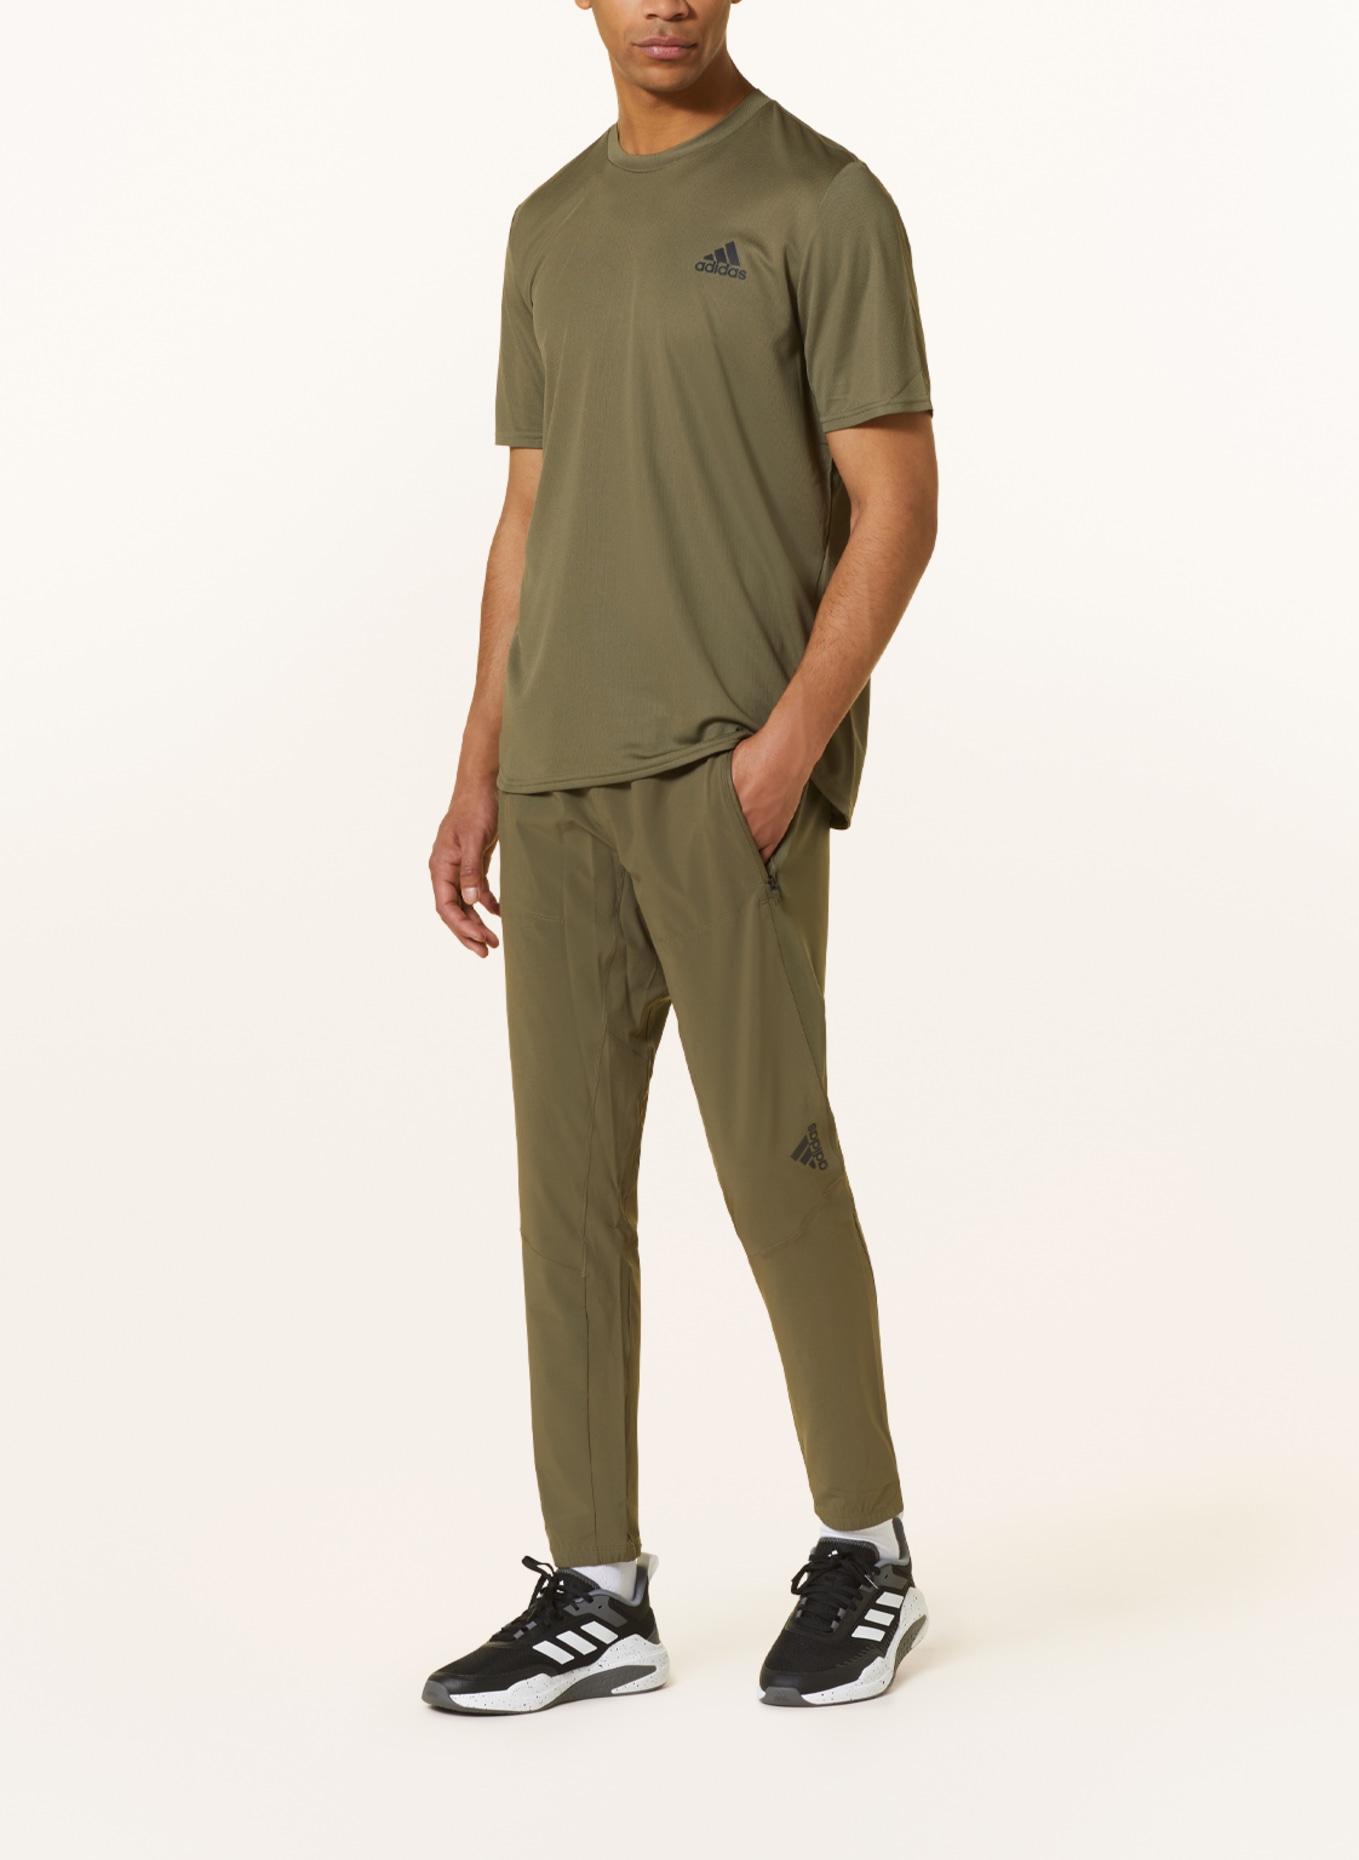 Adidas - Climalite - Climaproof - Workout Pants - Size M - Zipper Leg -  Side Pockets | www.M37Auction.com